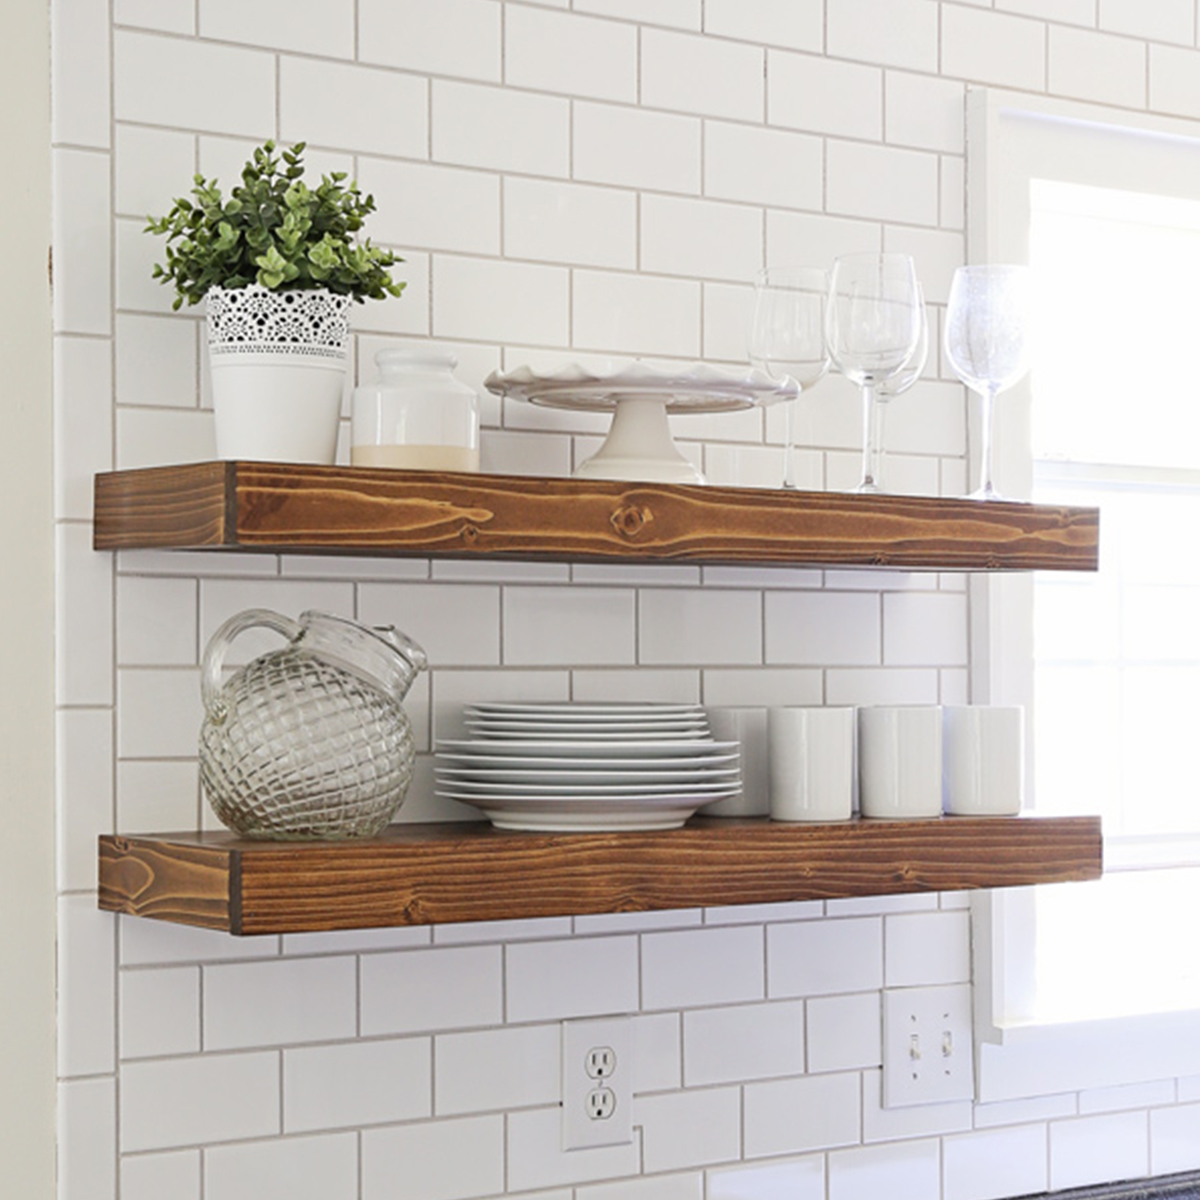 Diy Kitchen Floating Shelves Lessons, How To Hang Floating Shelves On Tile Wall